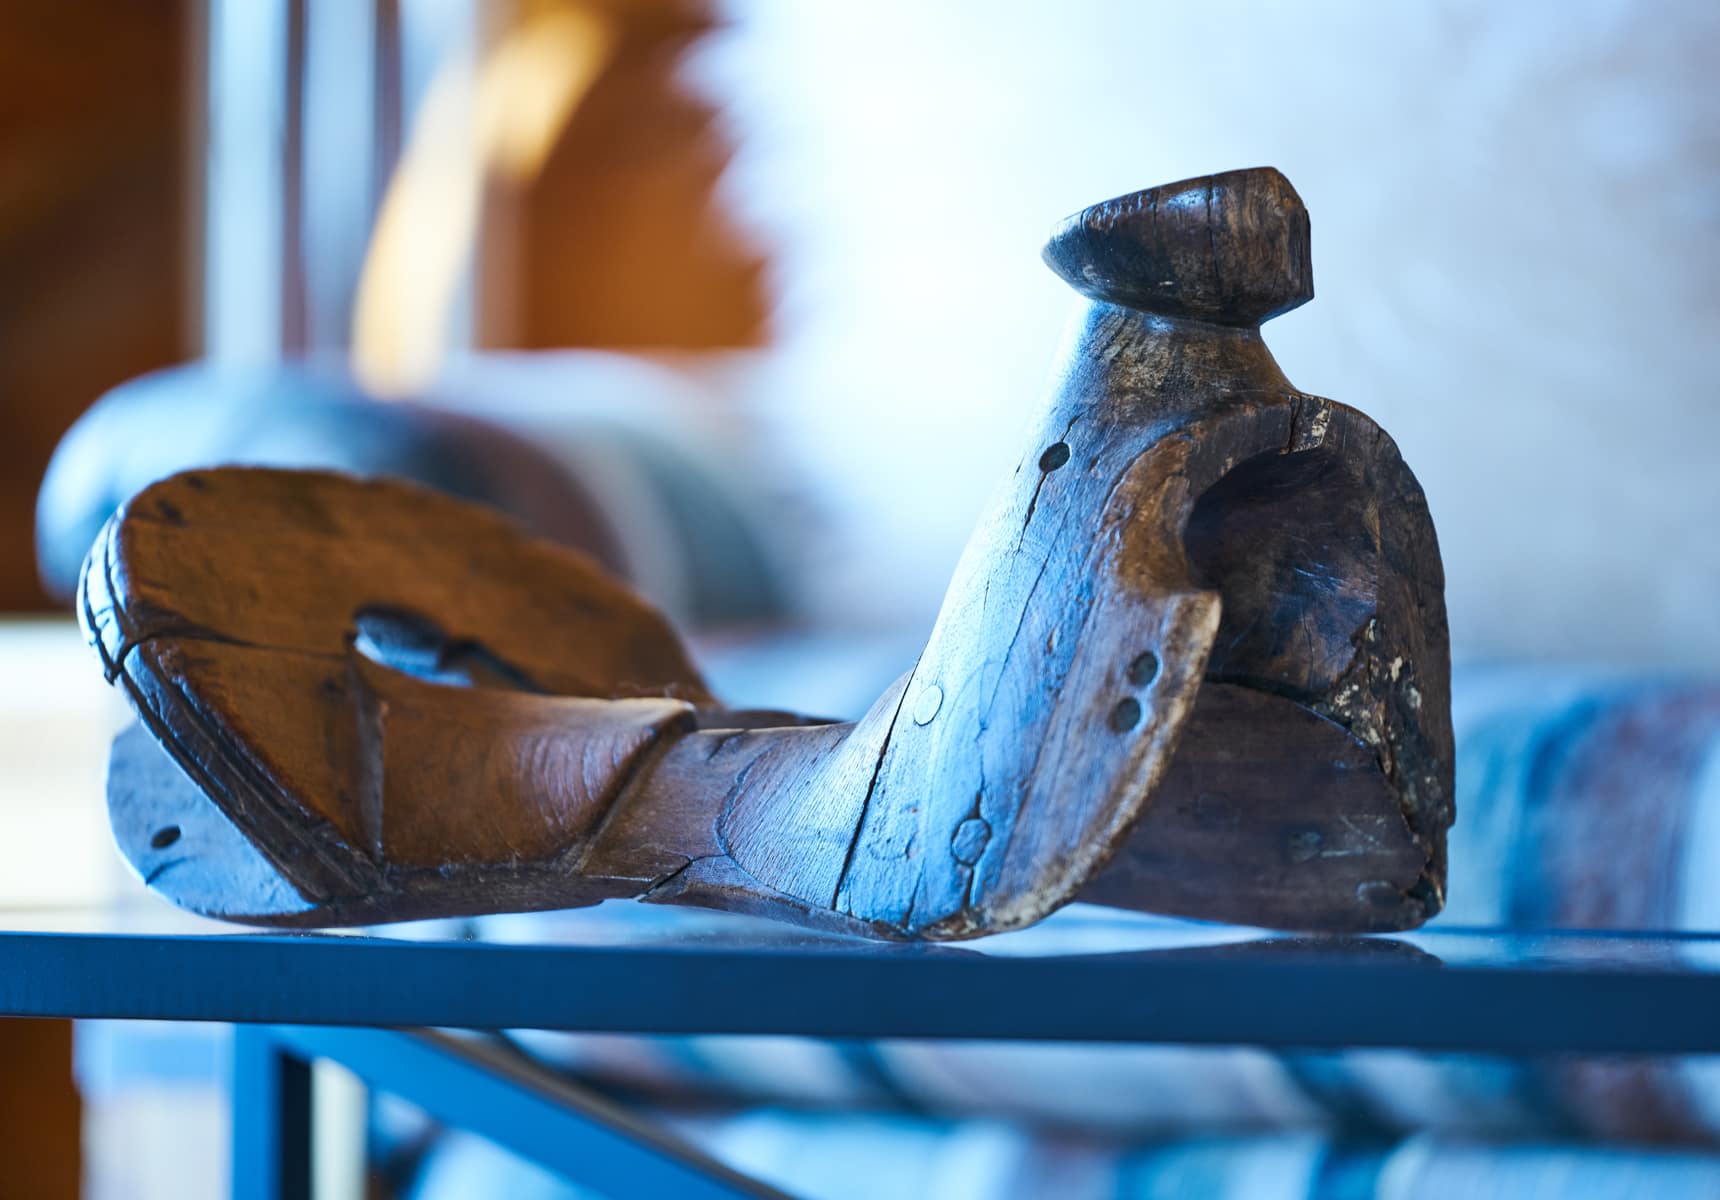 A decorative wooden saddle